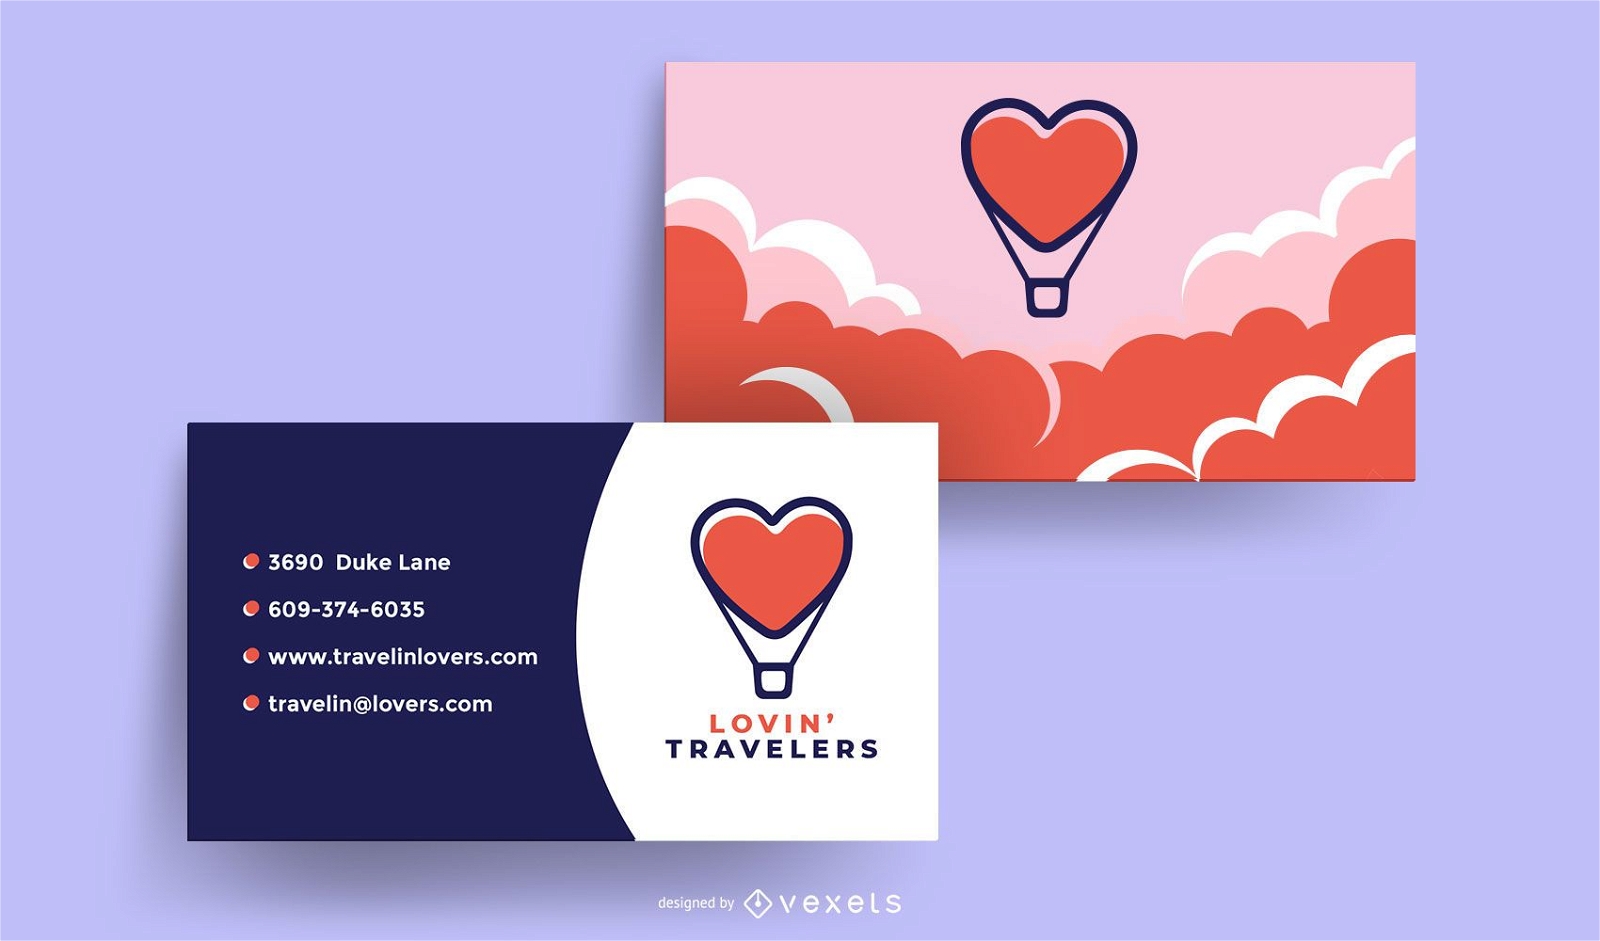 Loving Travelers Business Card Design